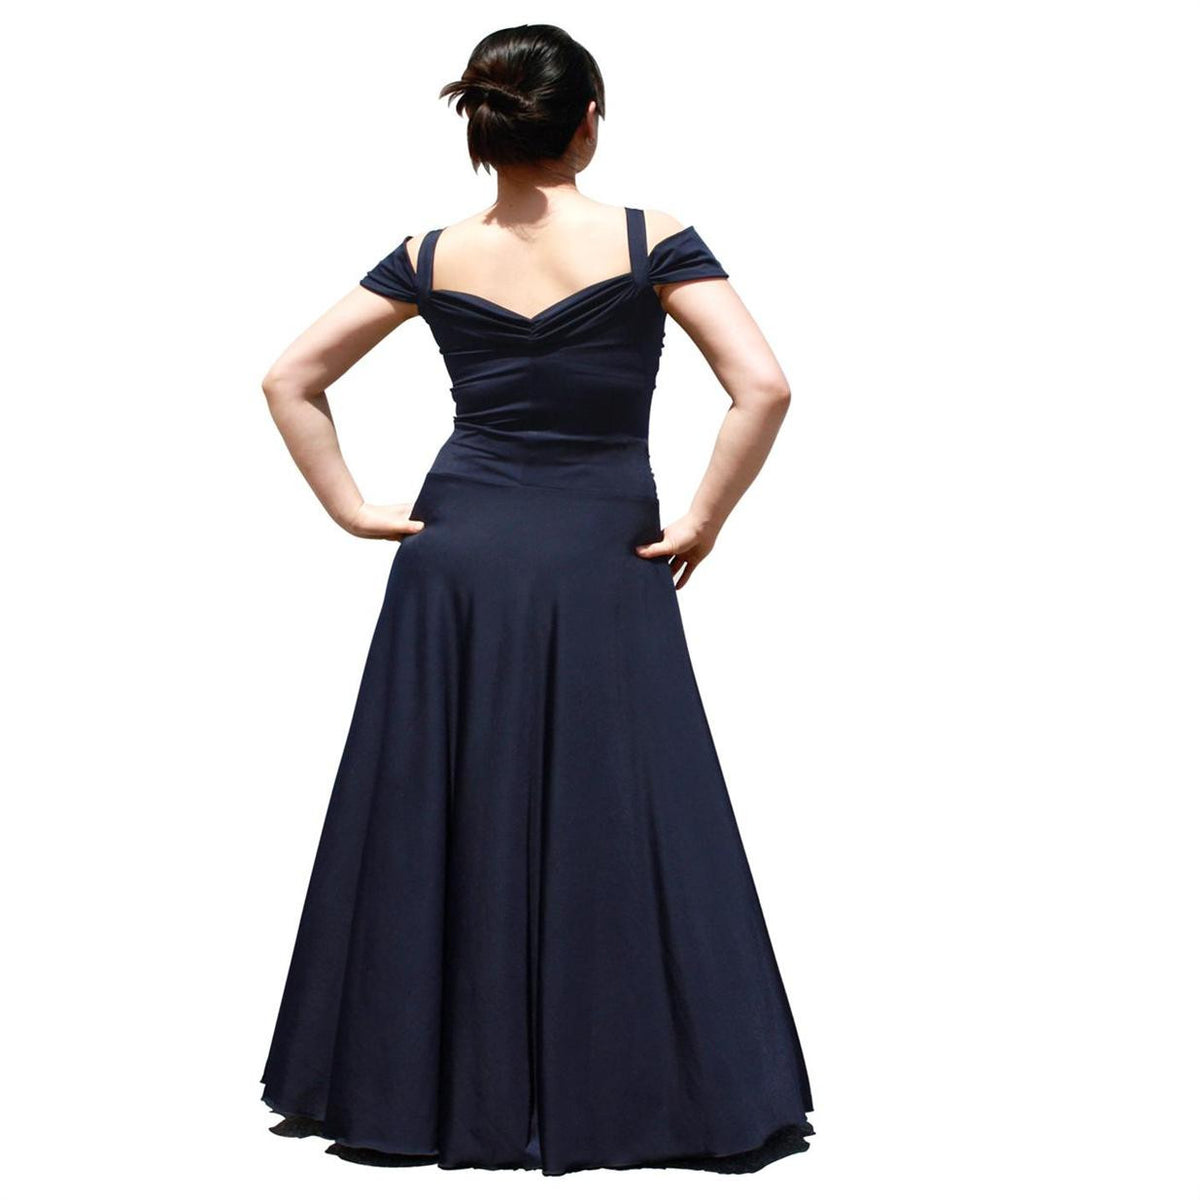 Evanese Women's Plus Size Elegant Long Formal Evening Dress with Shoul ...